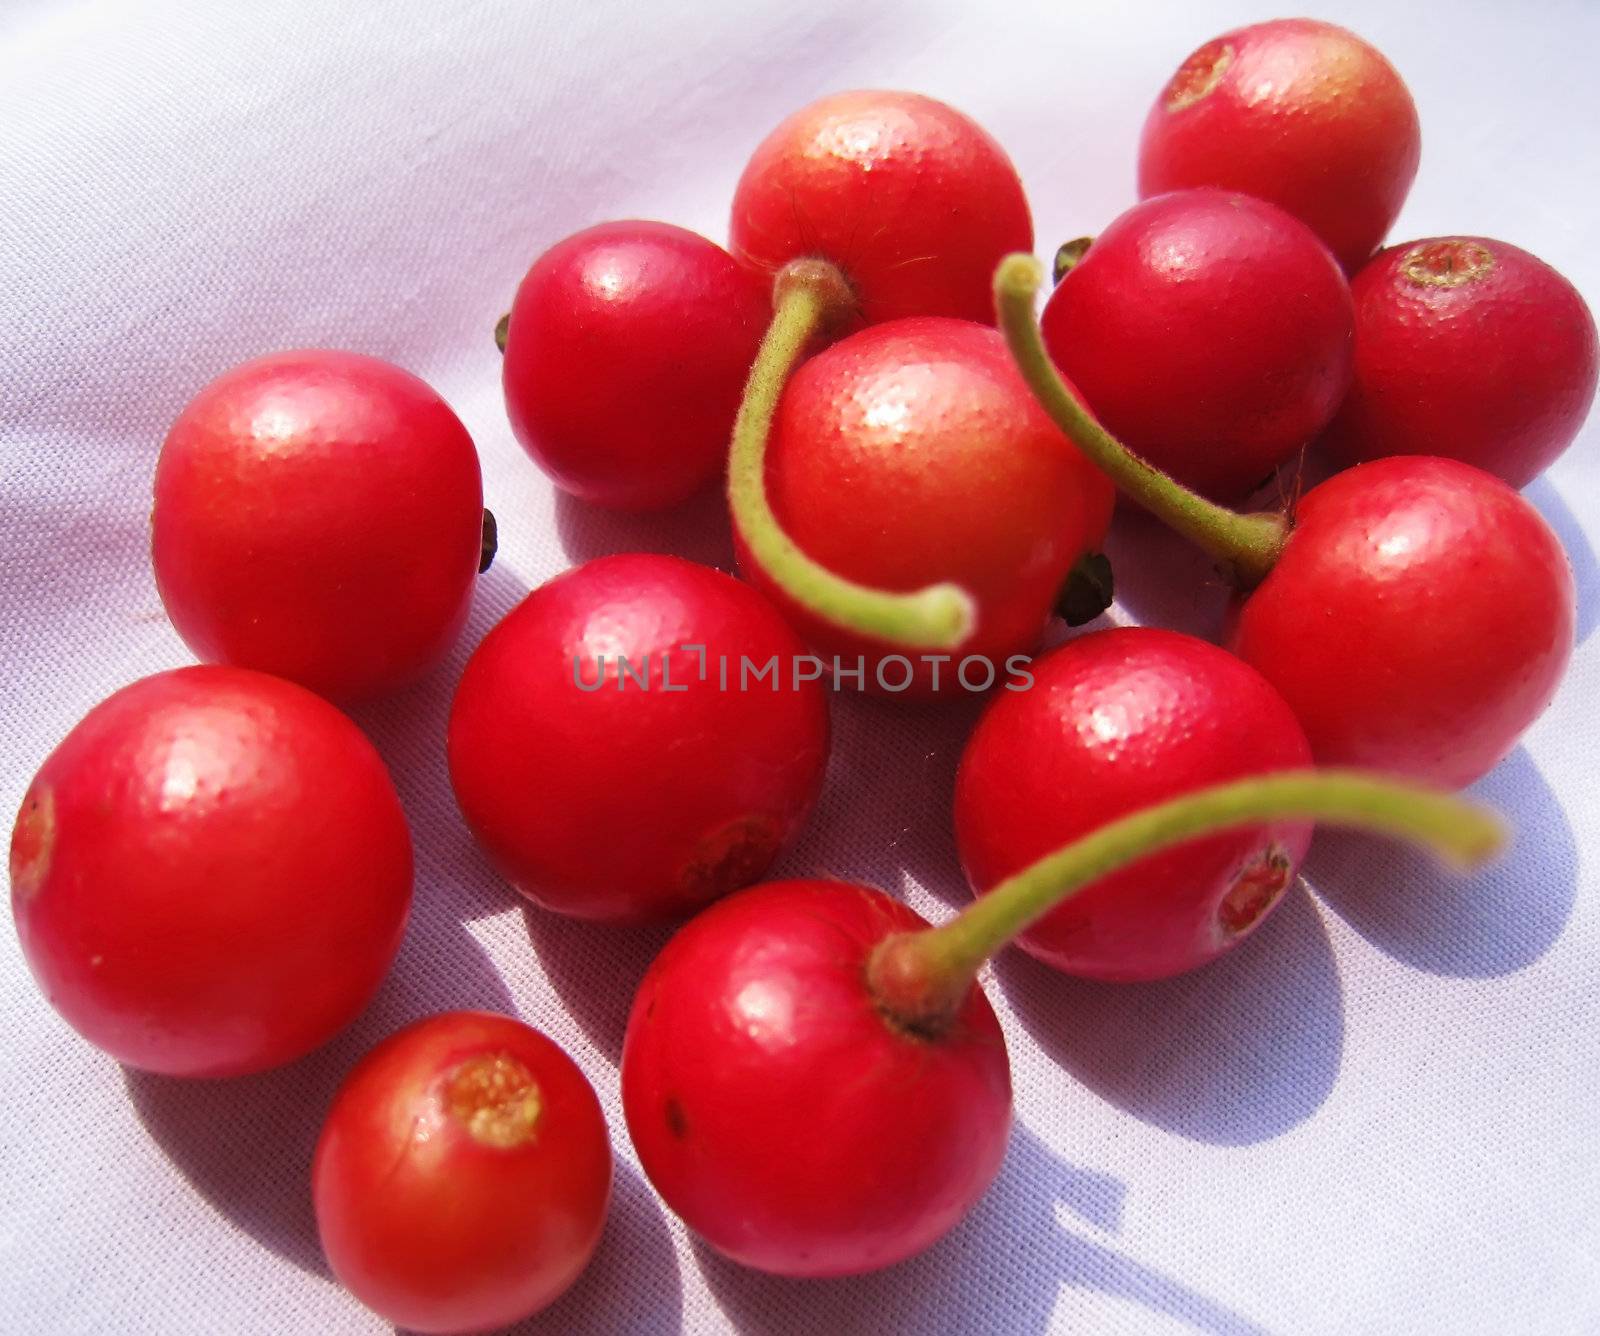 muntingia fruits  is used to make jam in Vietnam